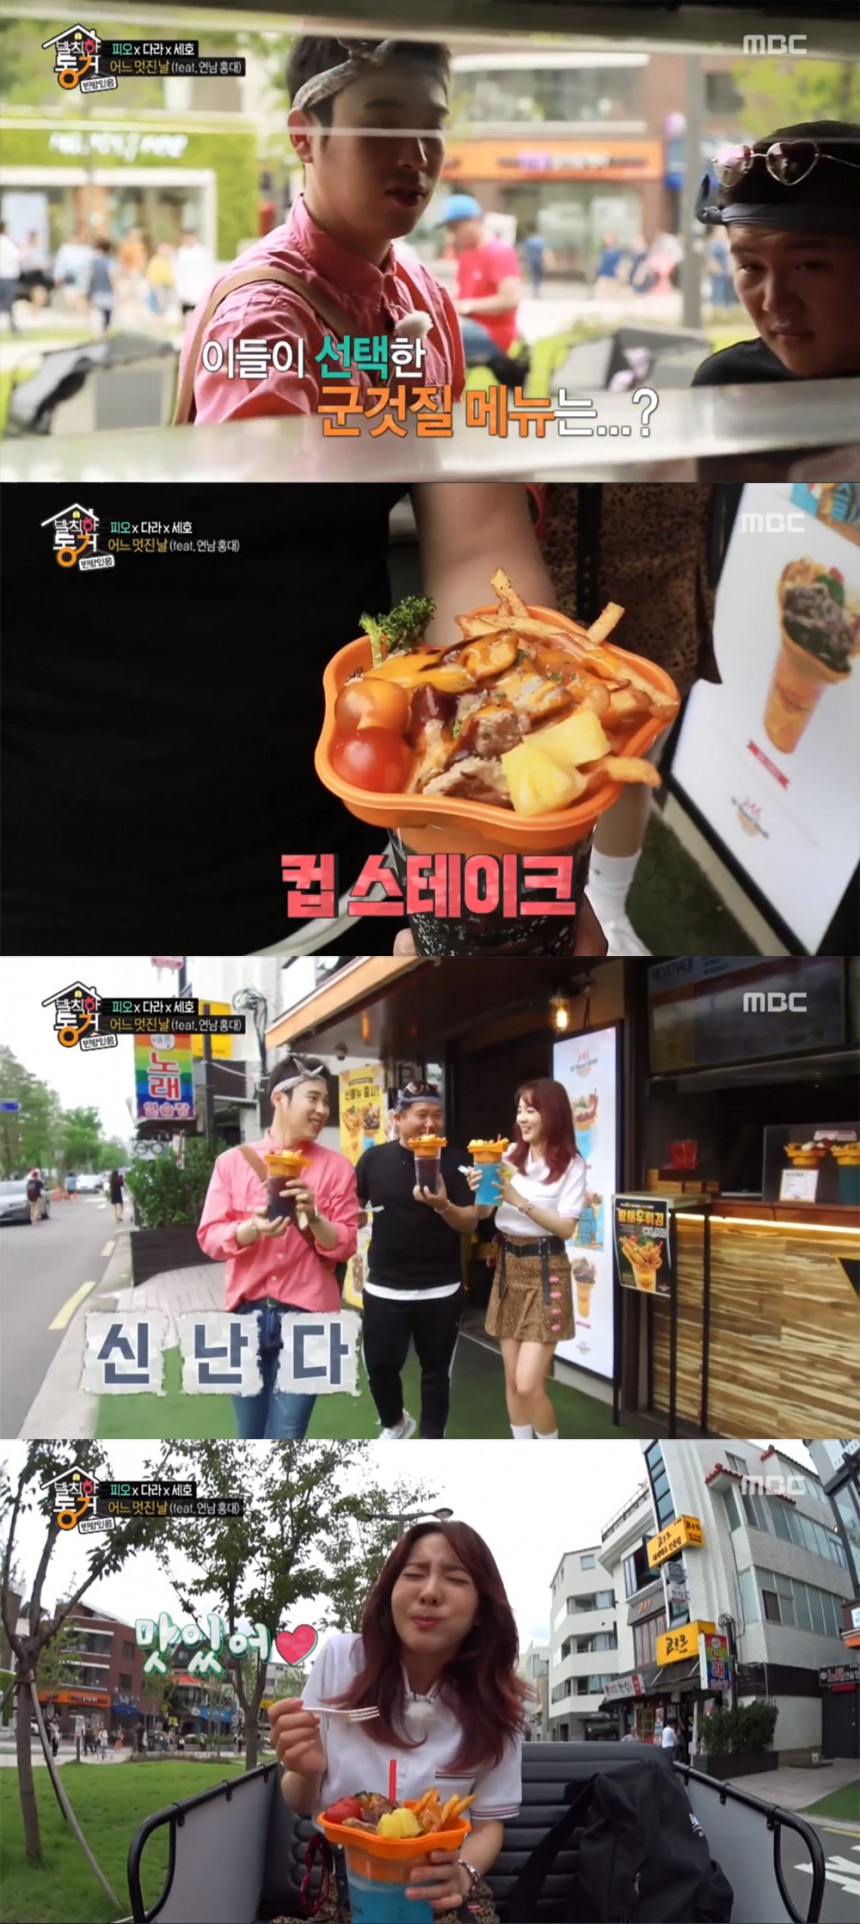 MBC ‘발칙한 동거 빈방 있음’ 방송화면 캡처